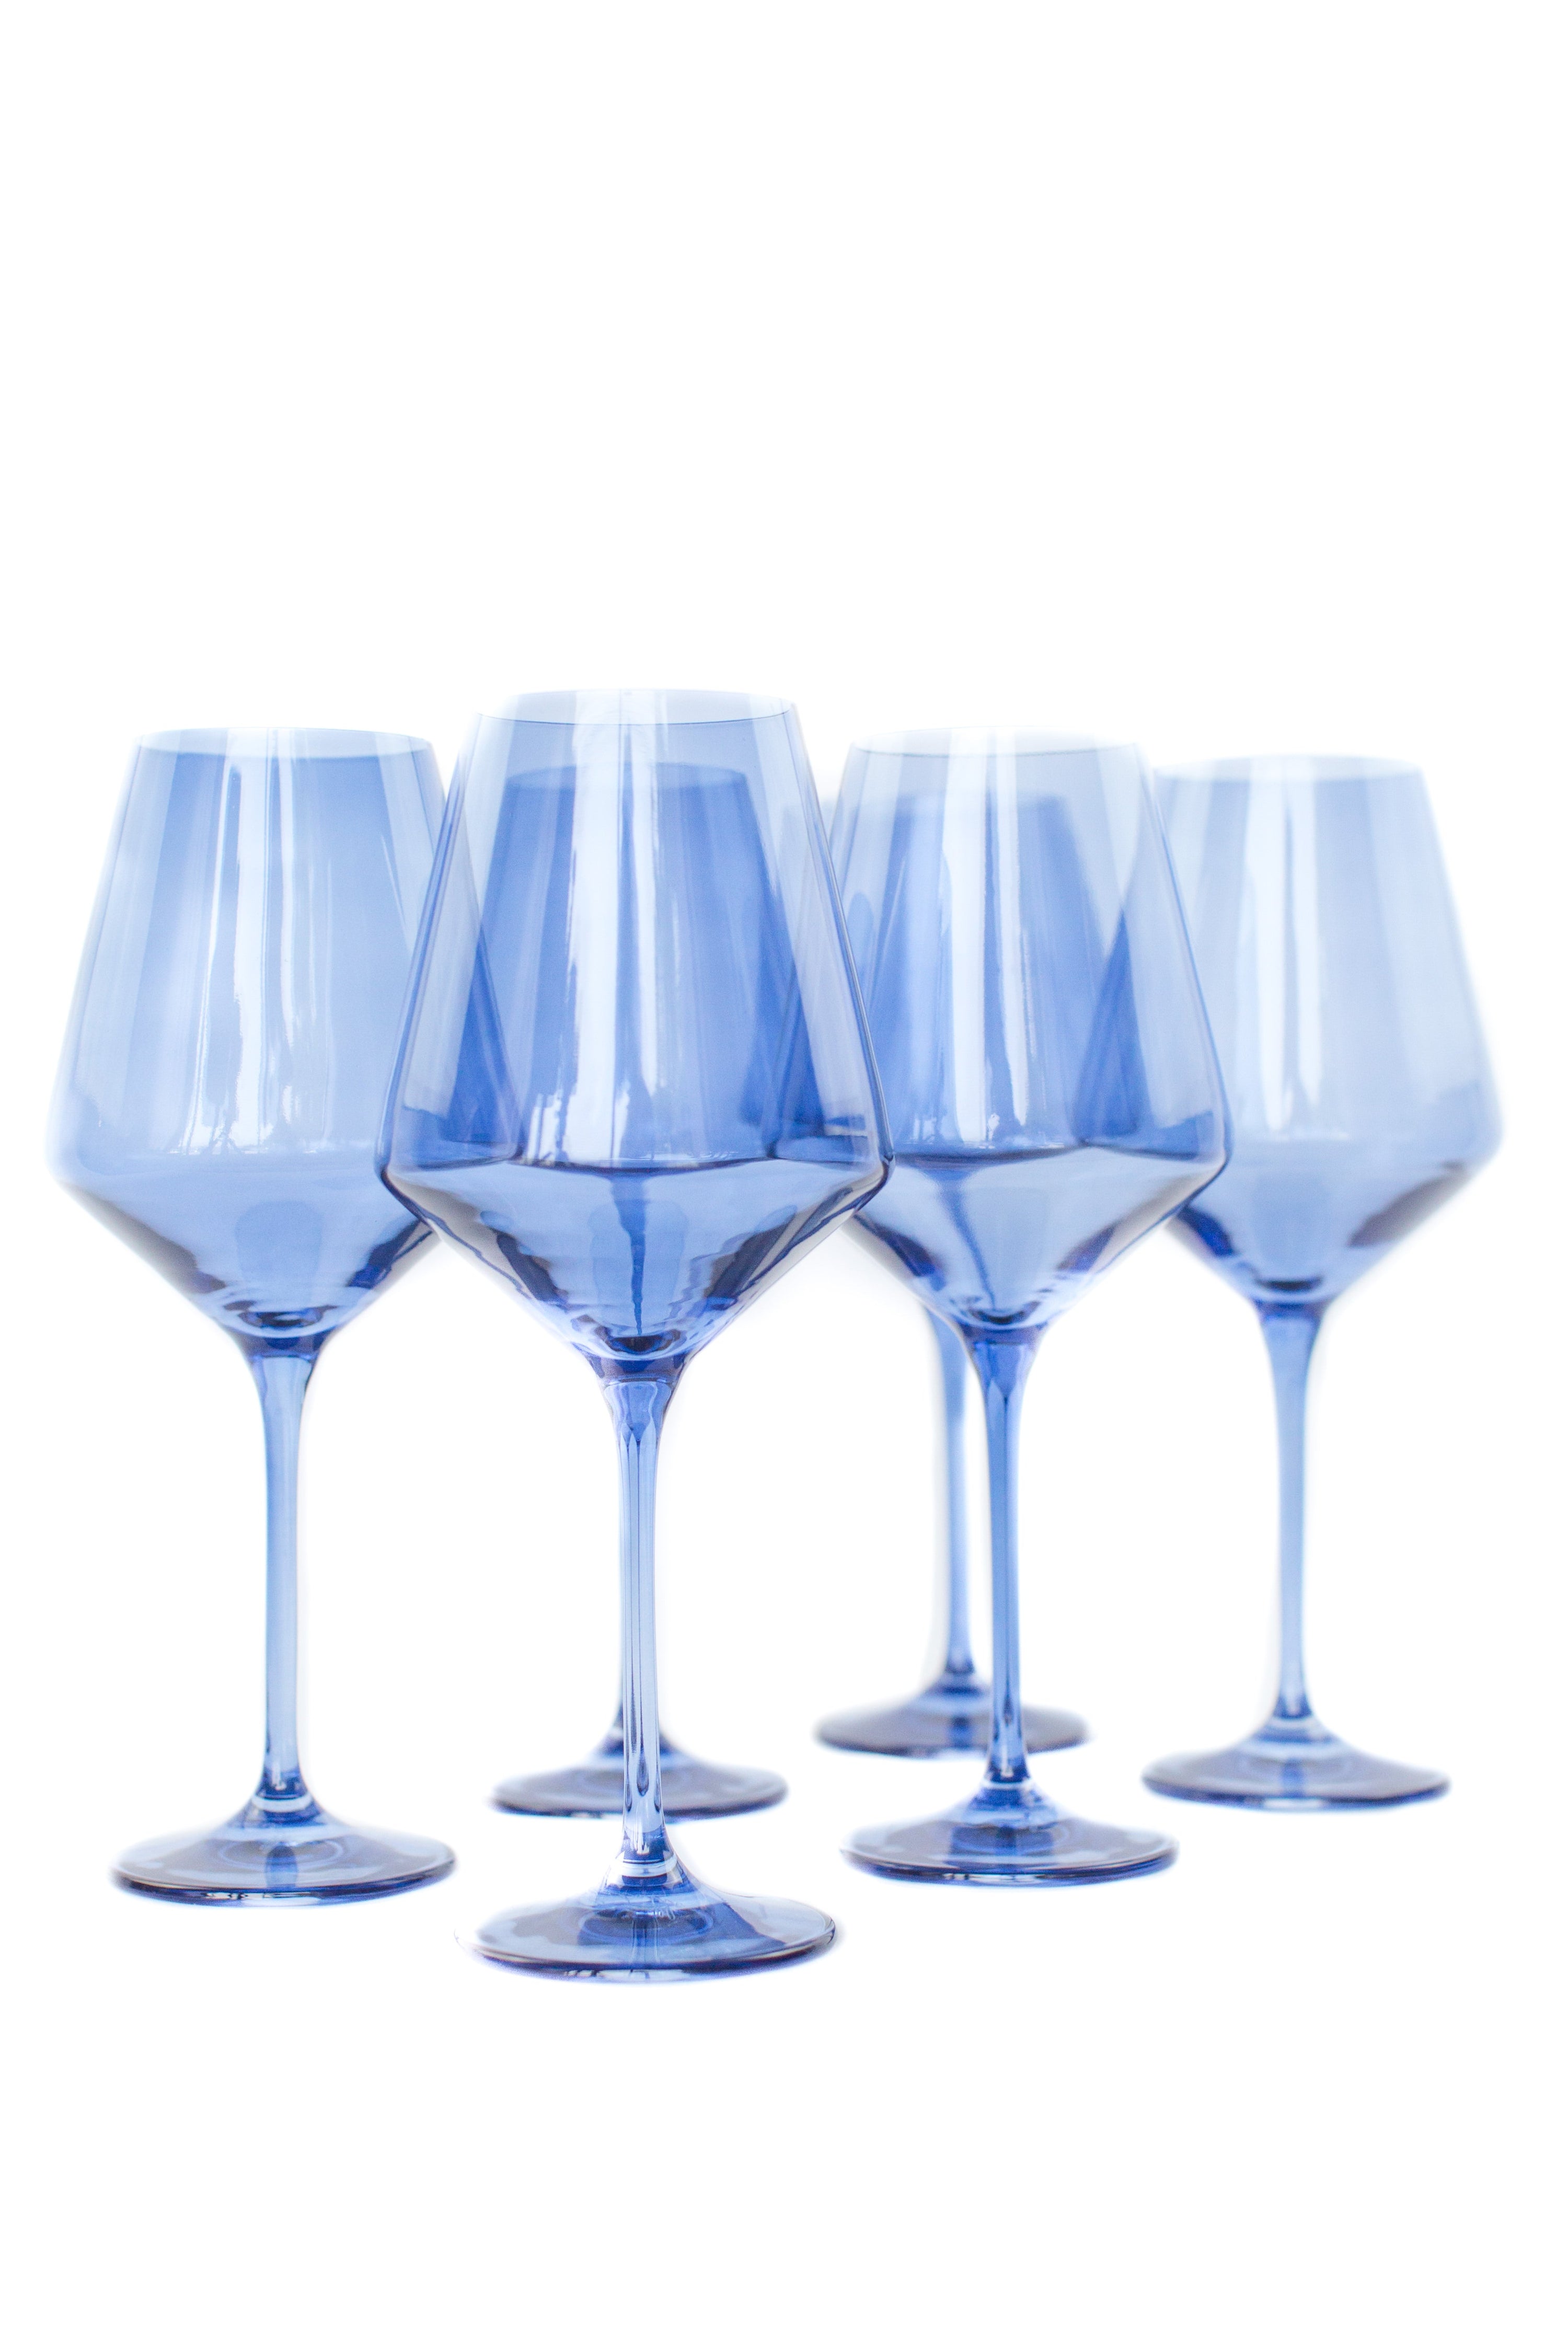 Estelle Colored Glass - Stemware Wine Glasses - Set of 6 Blush Pink